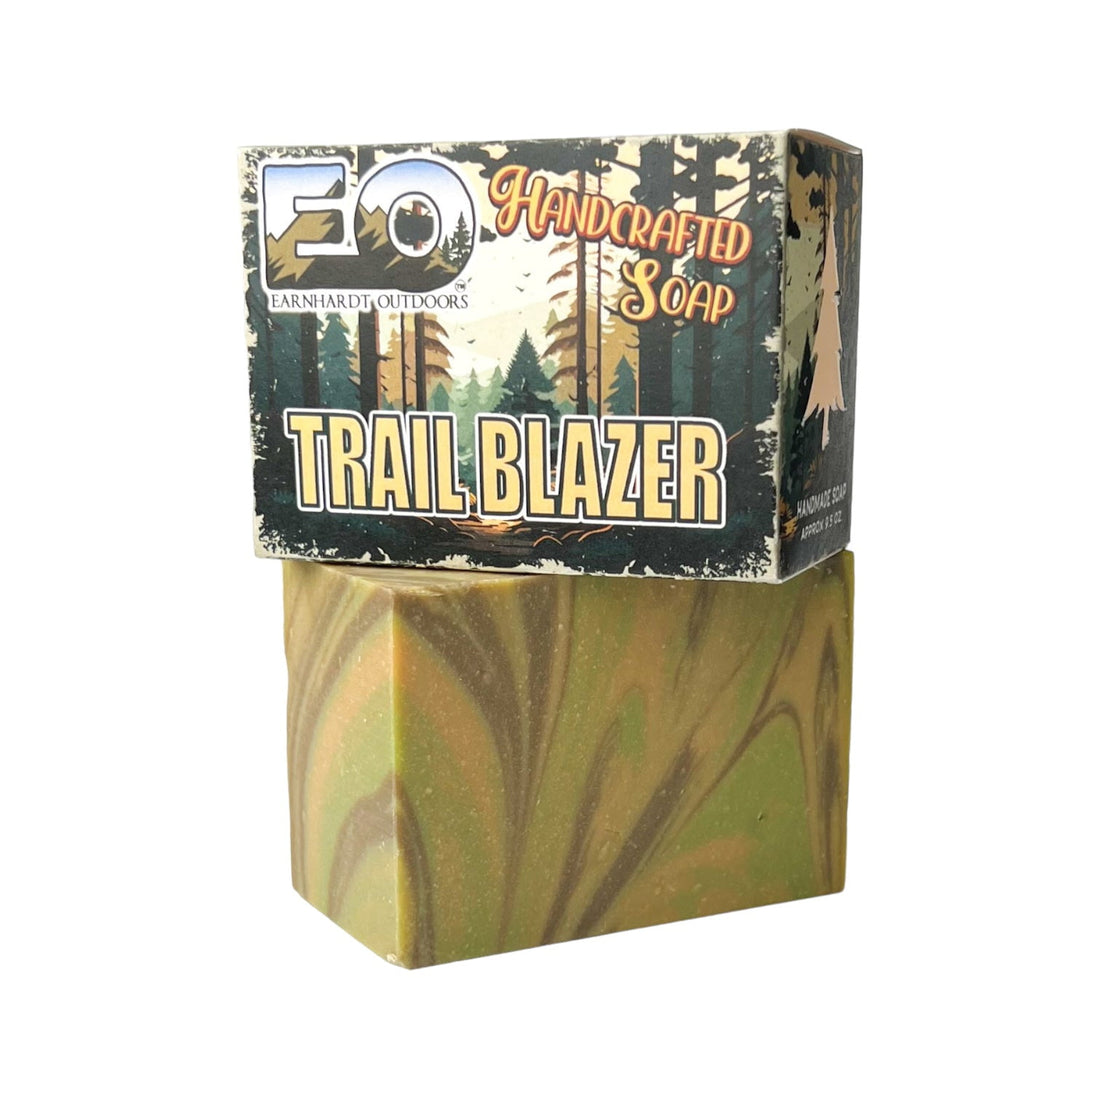 Trail Blazer Big Bar Soap Earnhardt Outdoors - Old Town Soap Co.